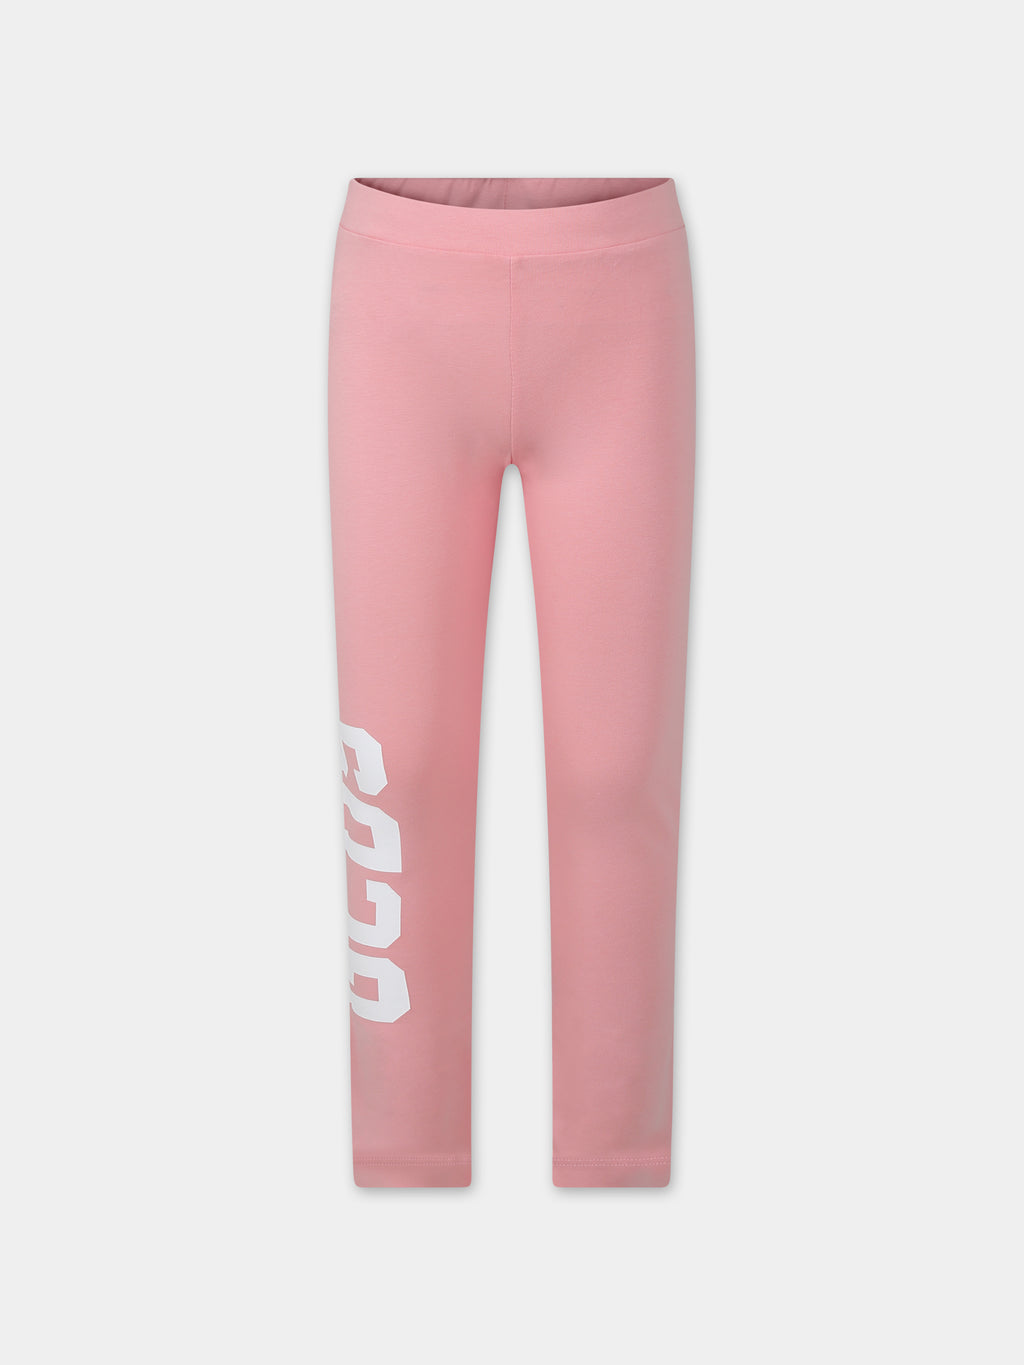 Pink leggings for girl with logo